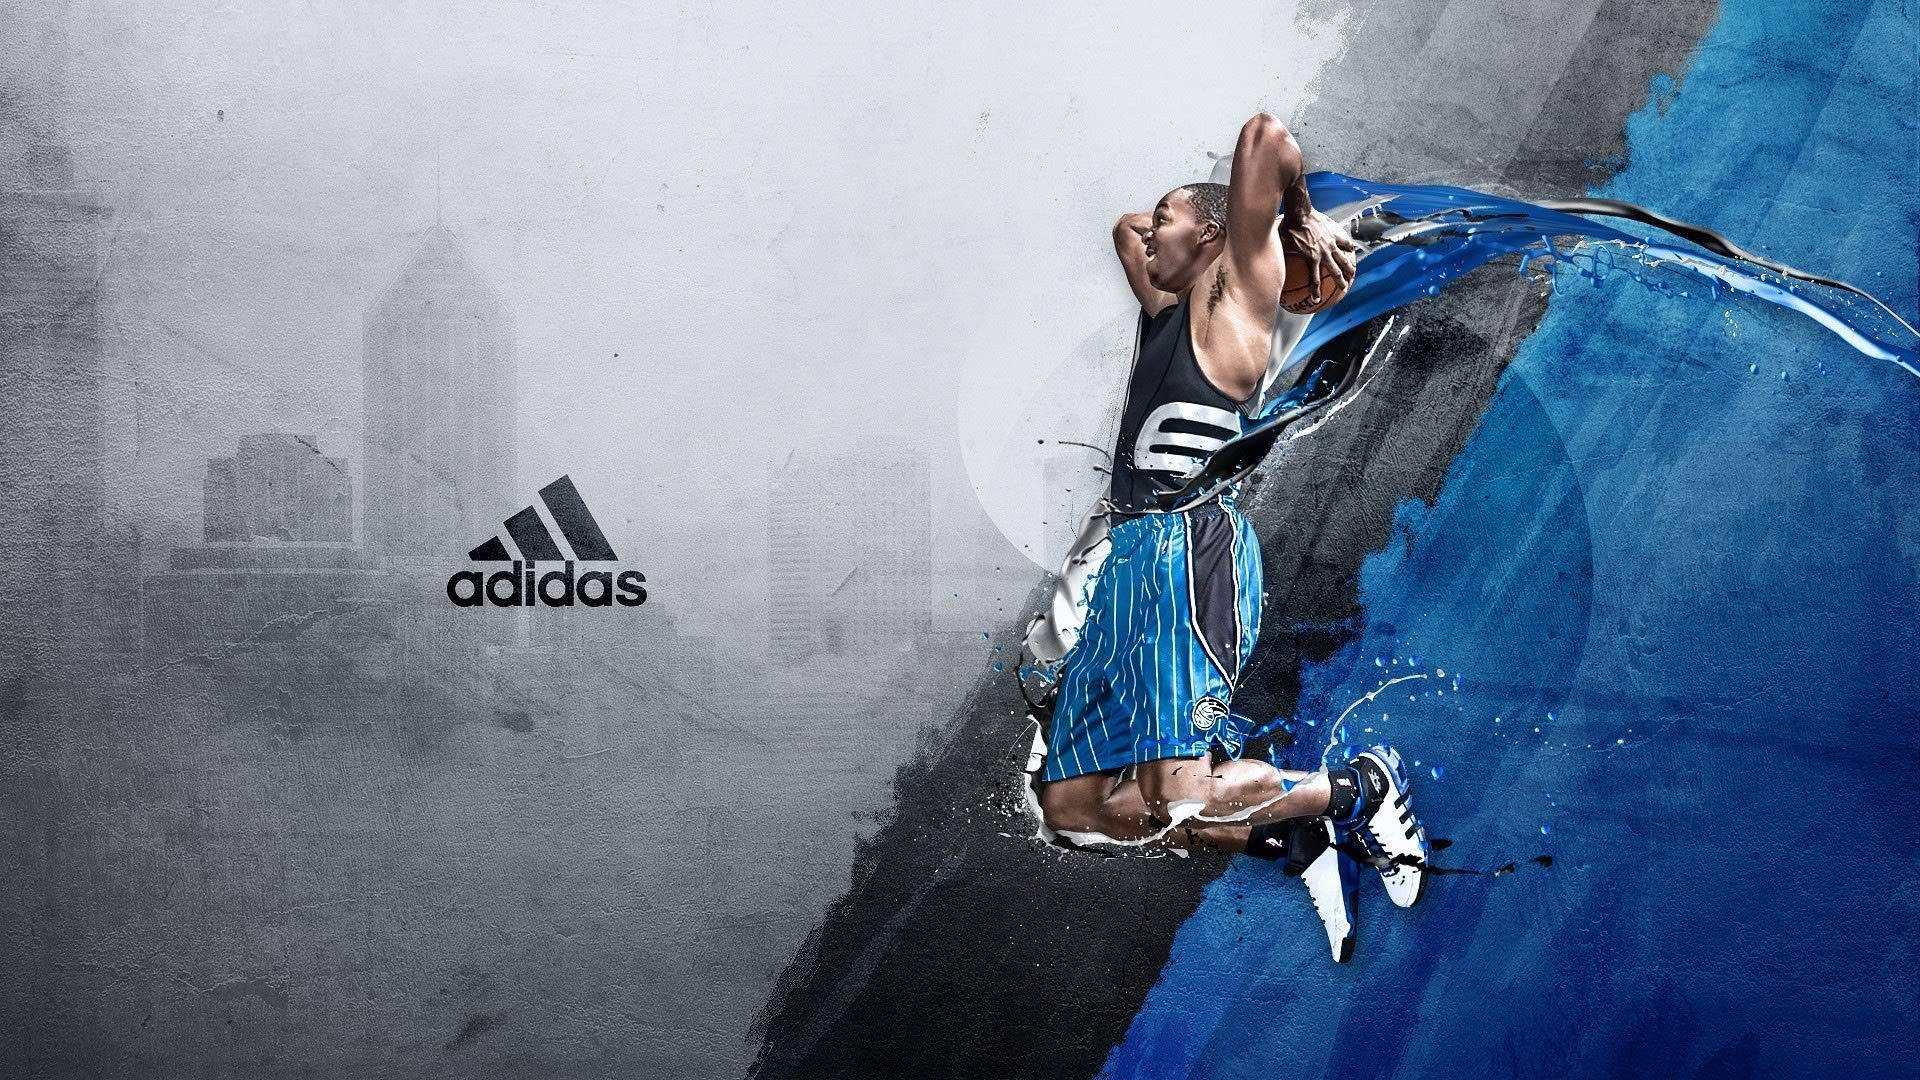 Adidas Brand Logo With Dwight Howard Wallpaper